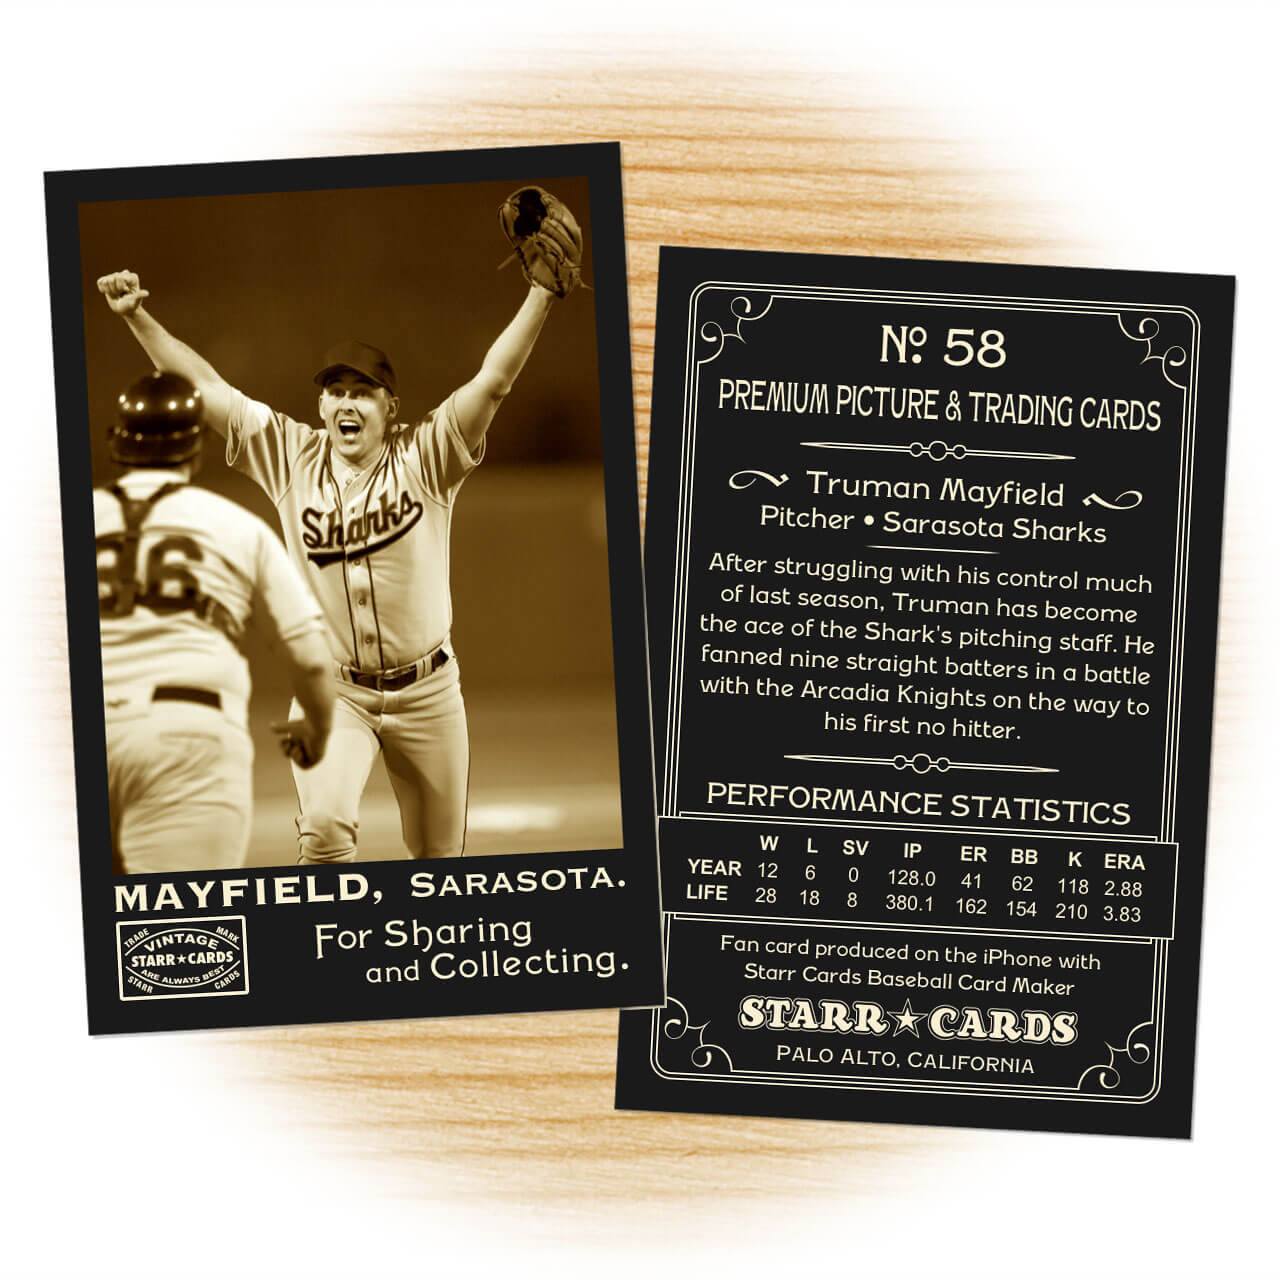 custom-baseball-cards-vintage-95-series-starr-cards-with-regard-to-custom-baseball-cards